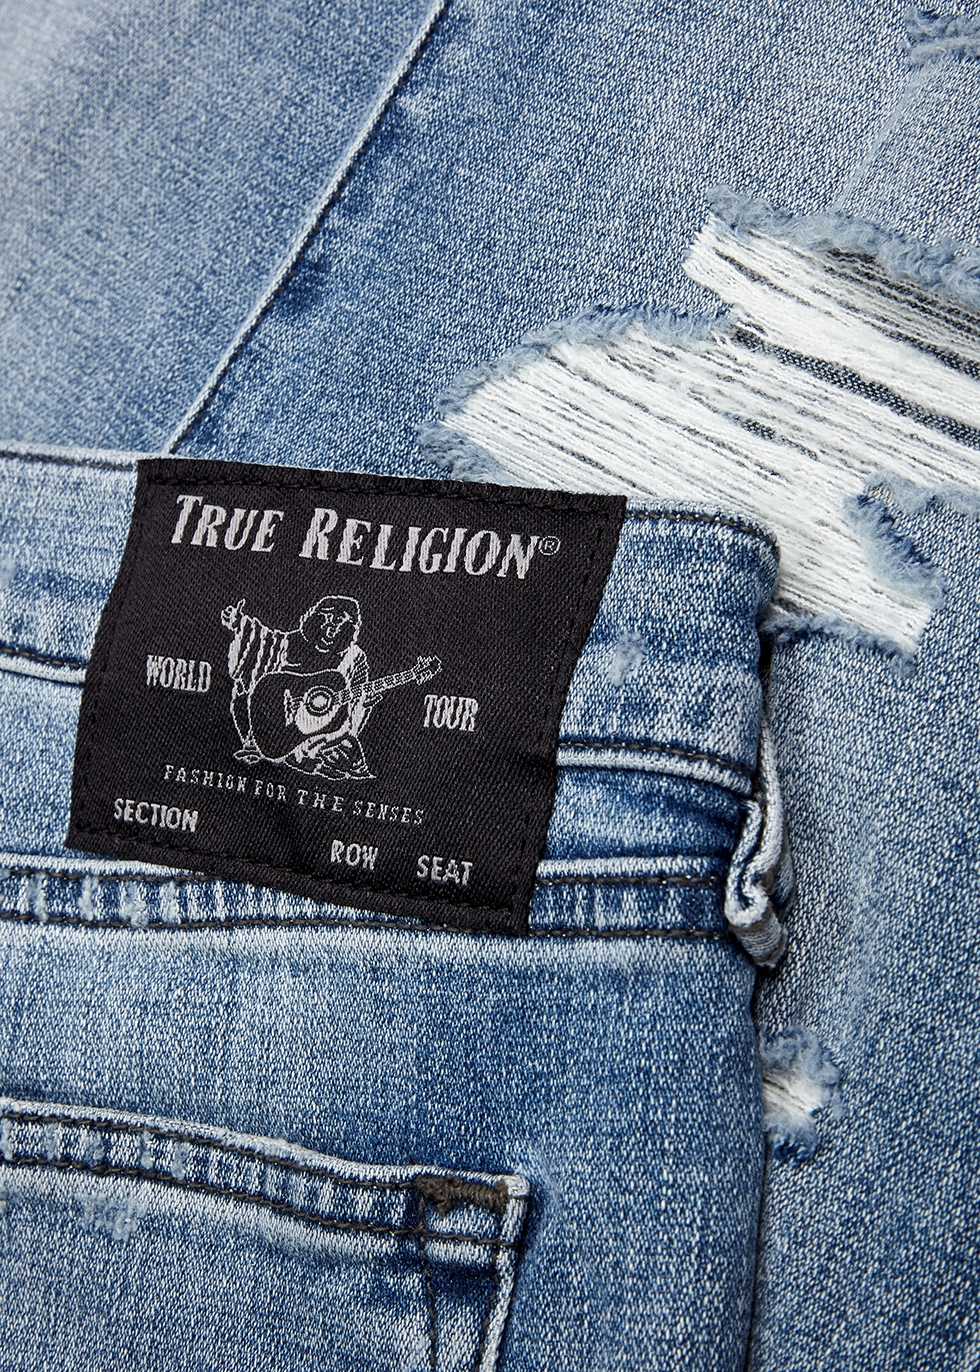 jeans similar to true religion